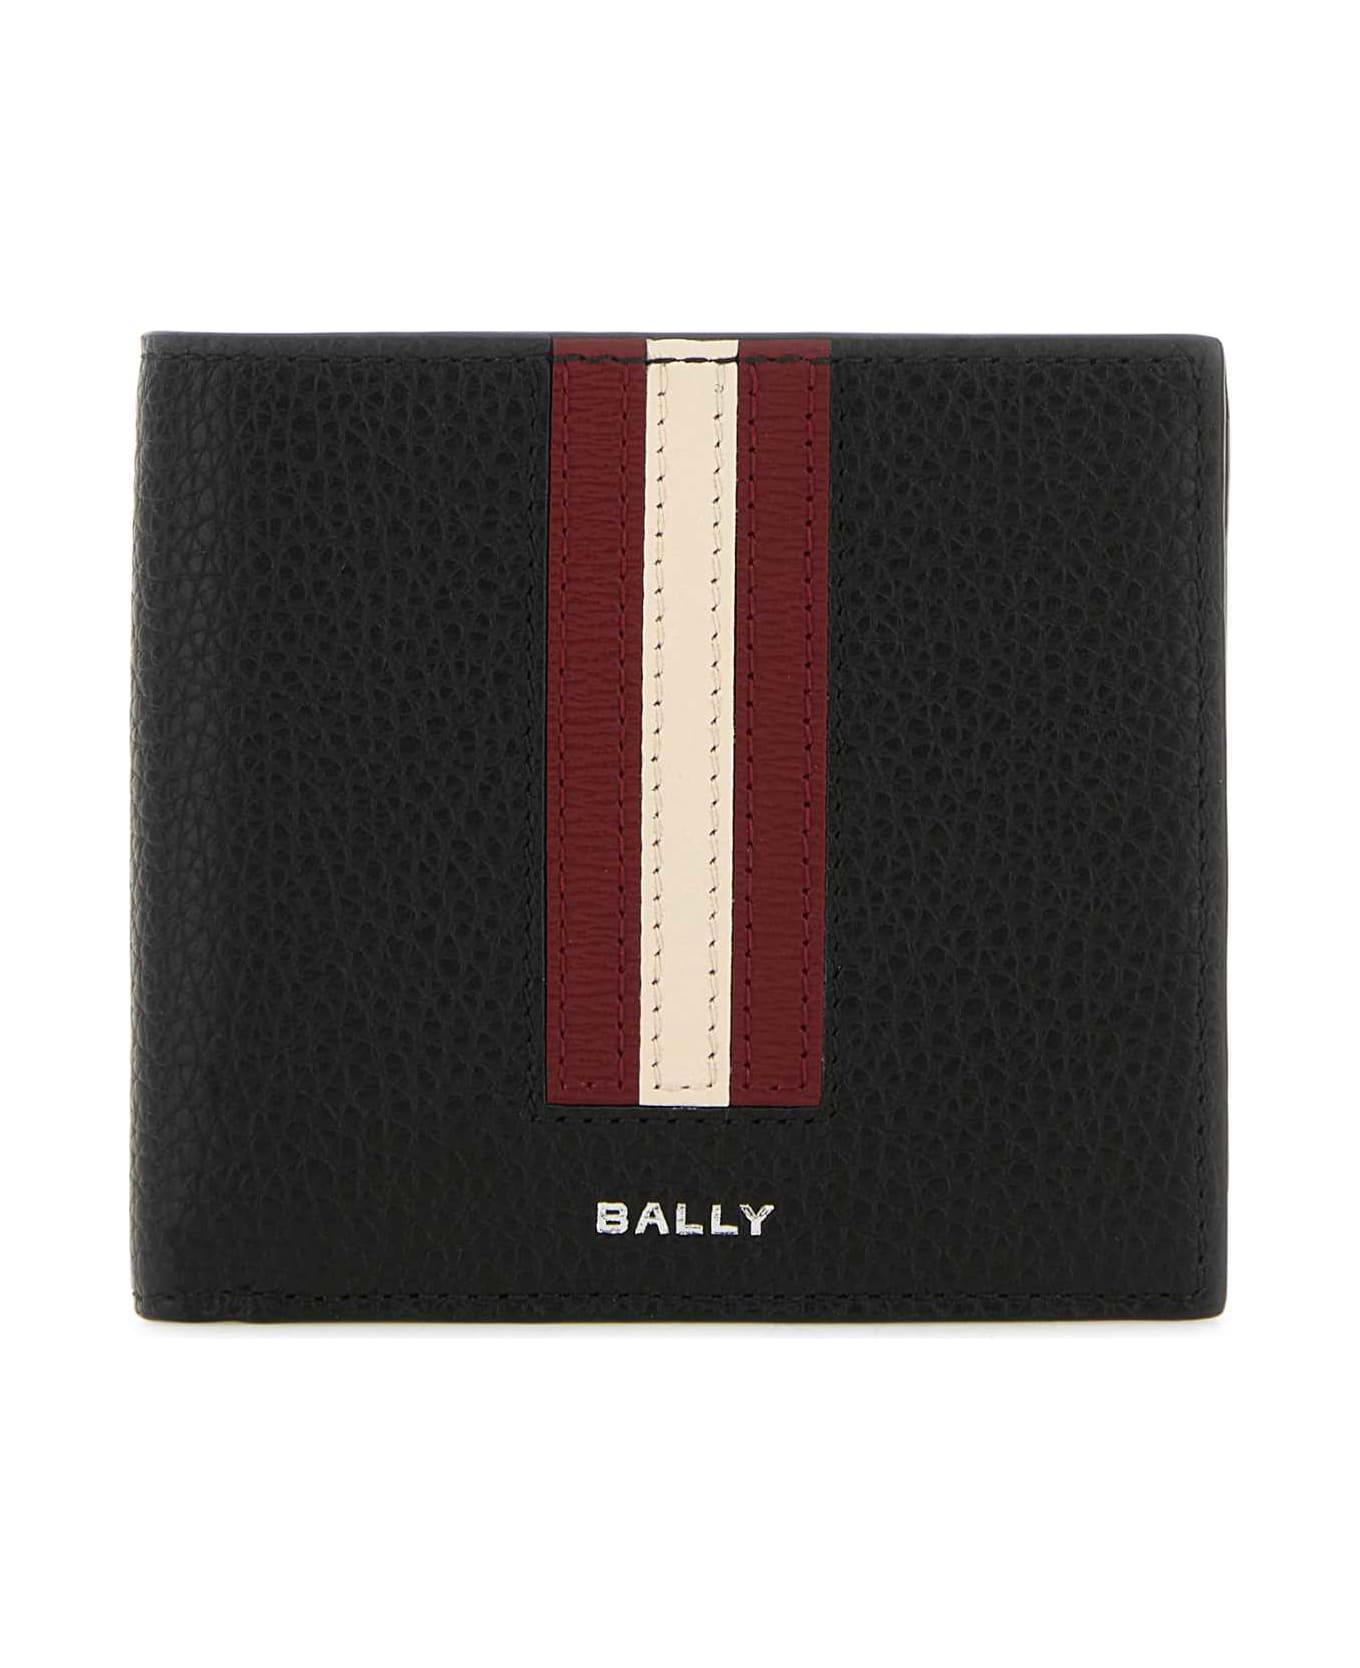 Bally Black Leather Wallet - BLACKBALLYREDPALL